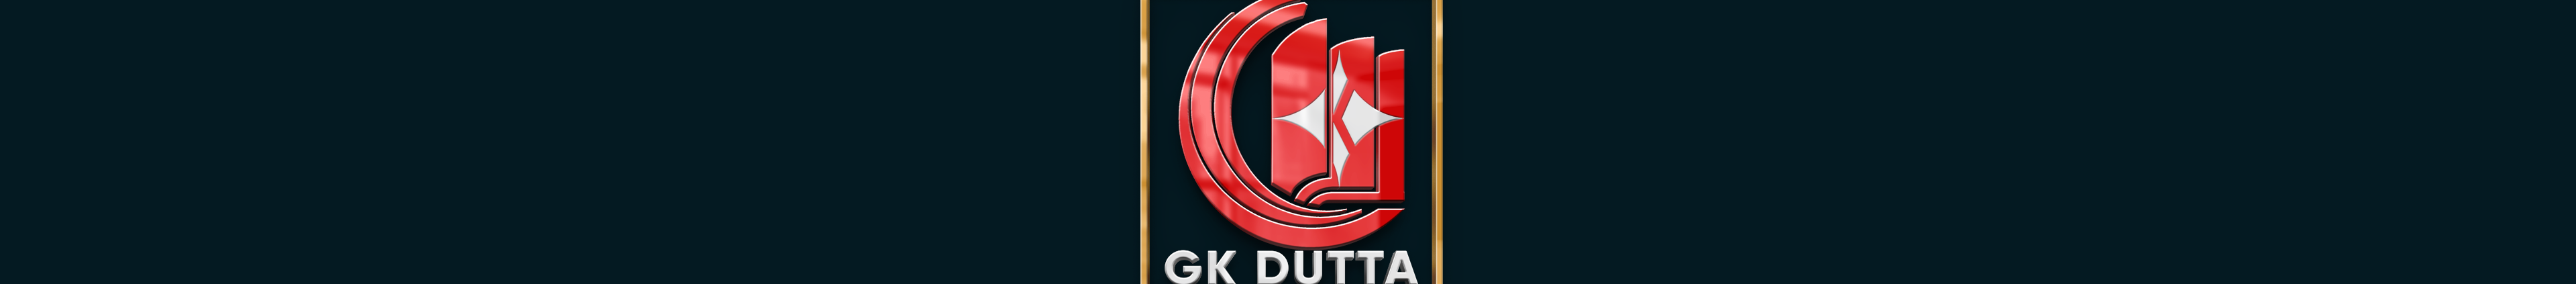 GK Dutta's profile banner